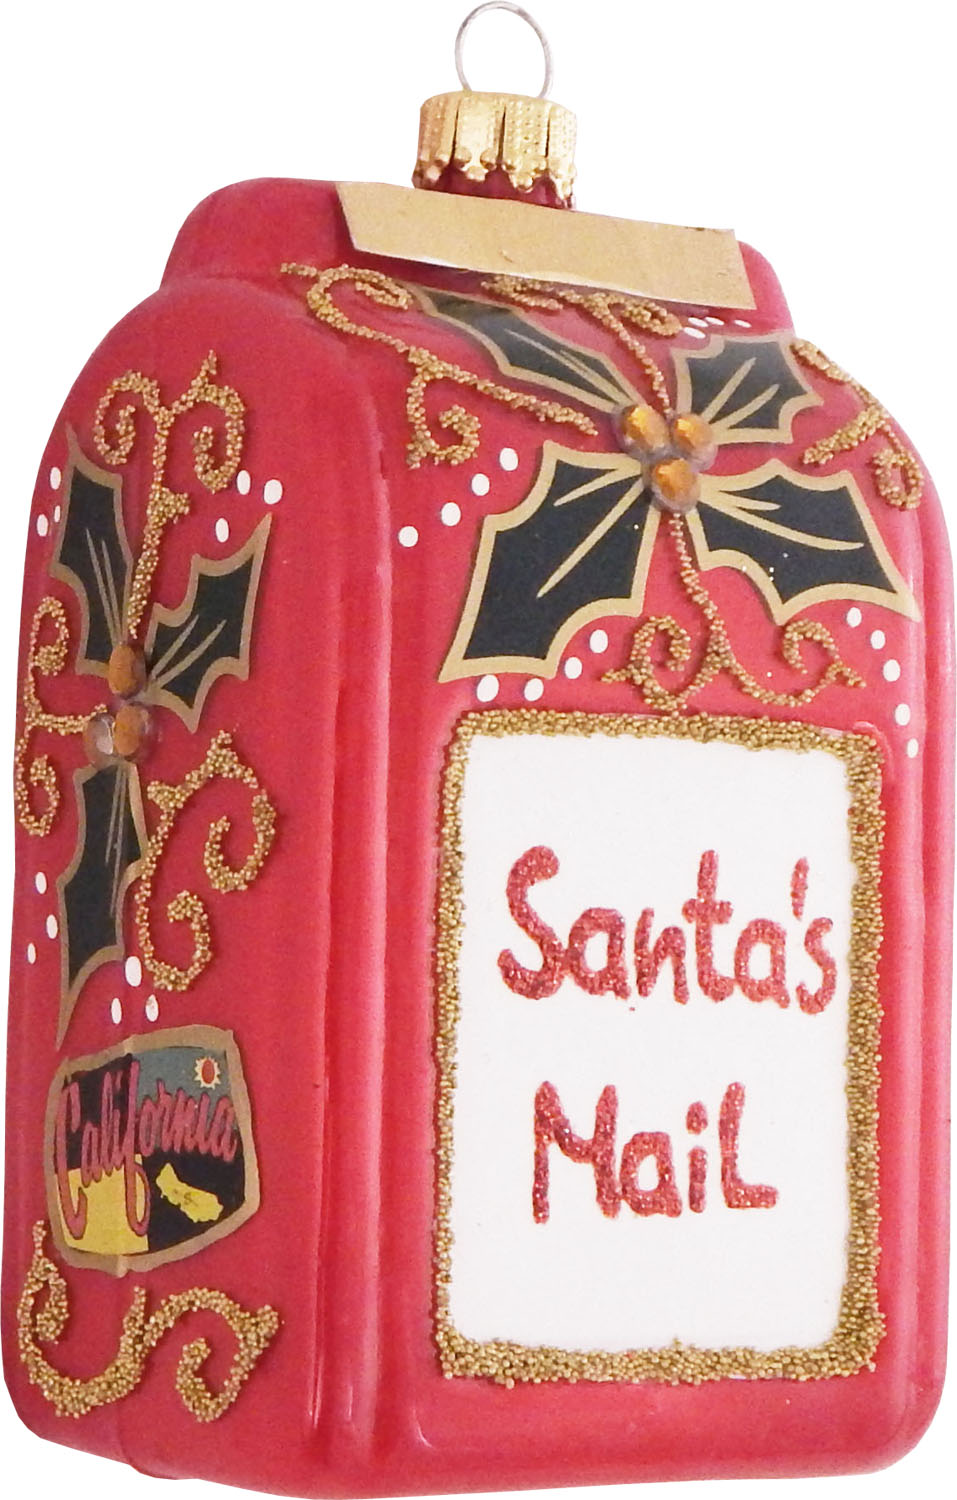 Christmas by Krebs Santas Mail Postal Box With Poinsettias Christmas Holiday Ornament Glass